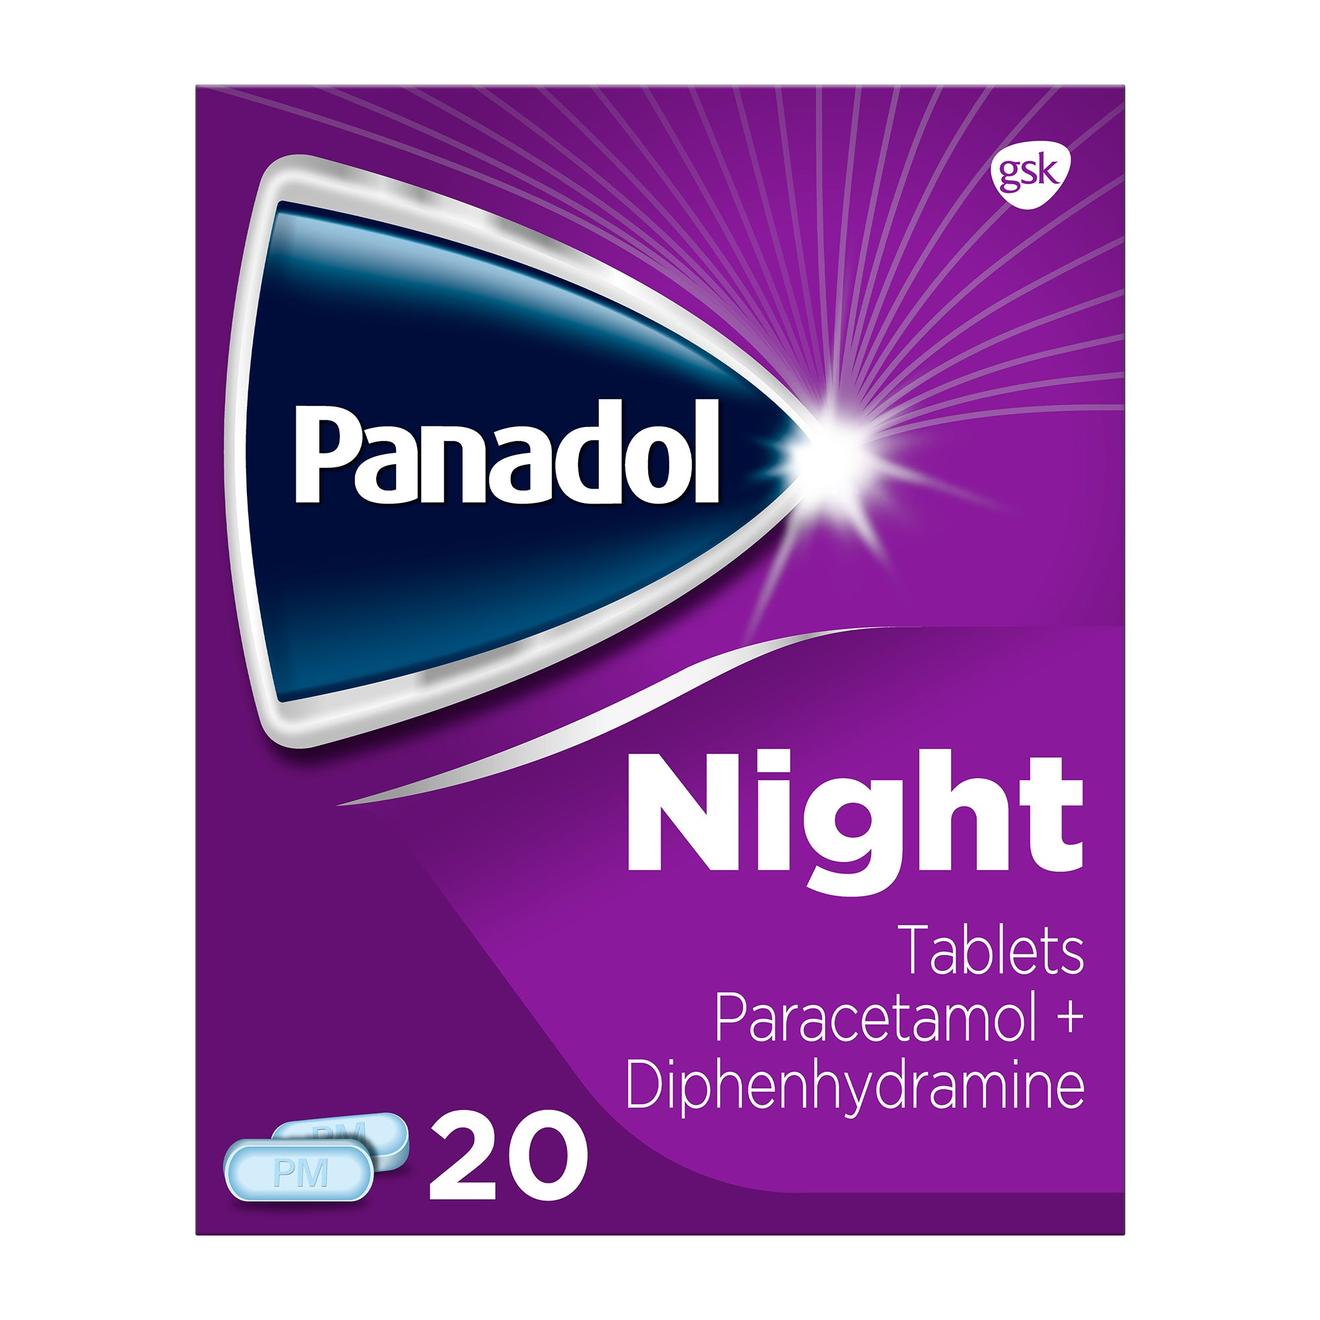 Panadol night 500mg/25mg paracetamol + diphenhydramine tablets offers at £549 in Lloyds Pharmacy